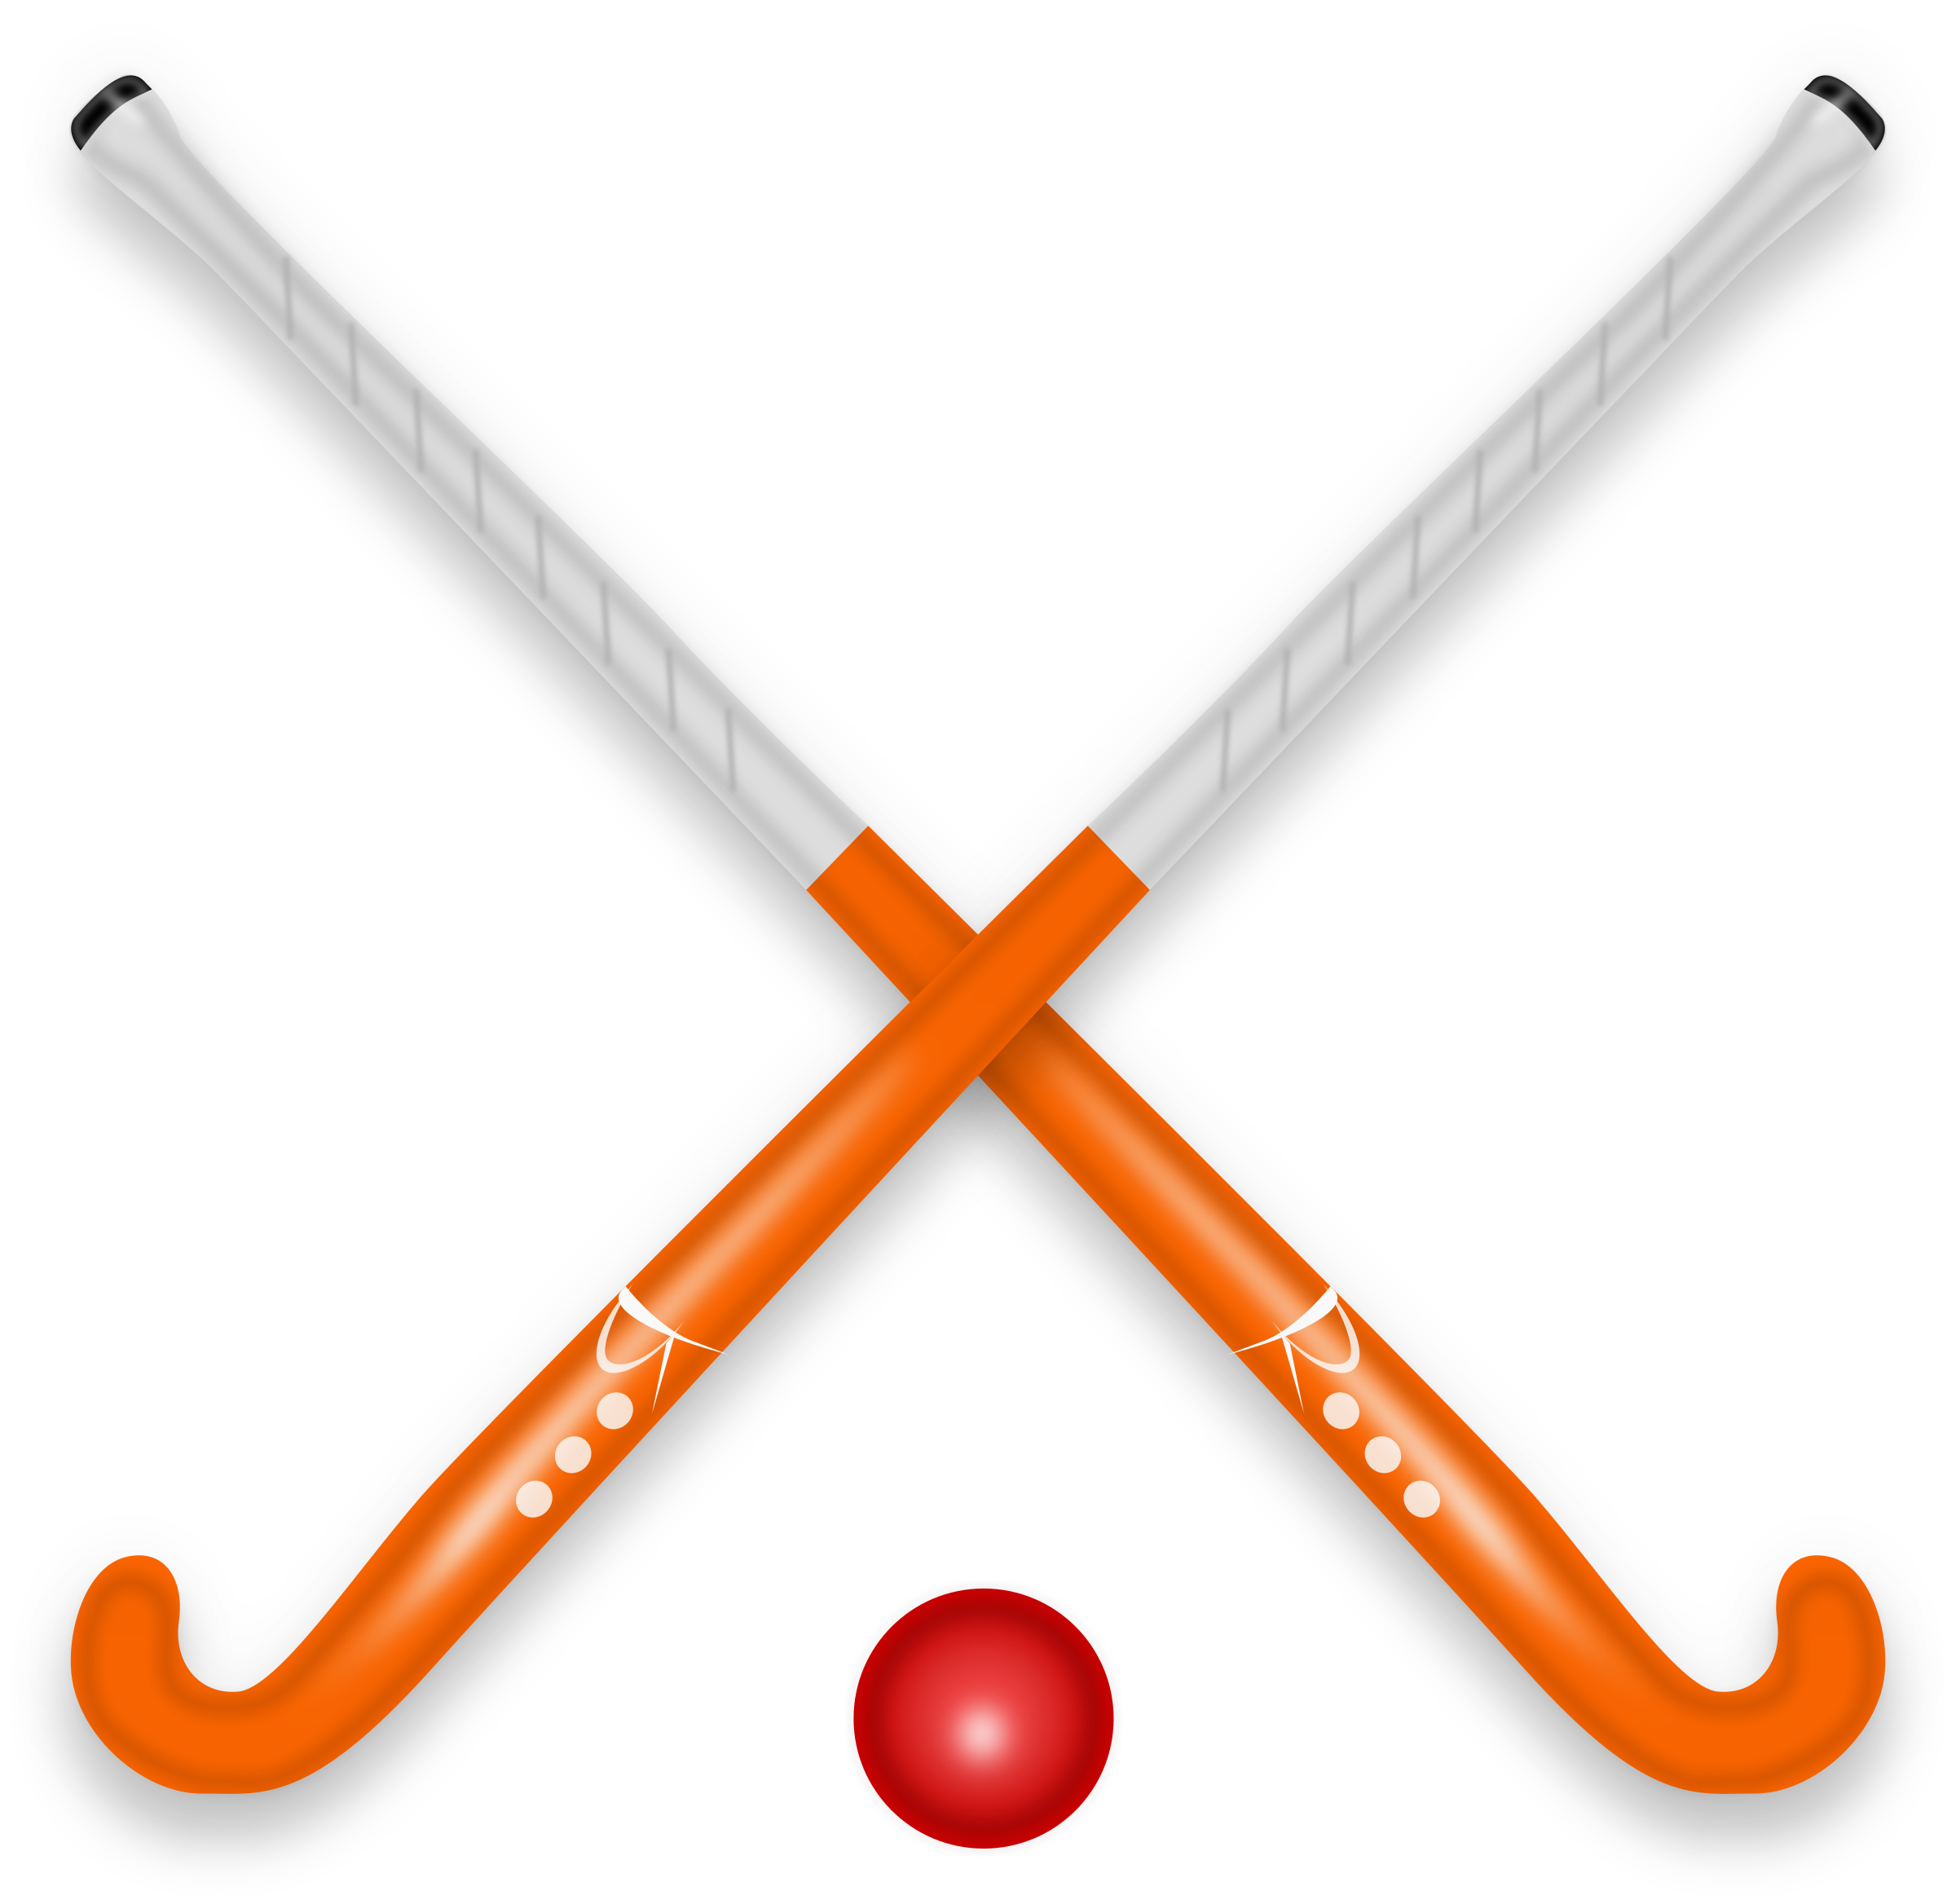 Clipart - Hockey Stick & Ball